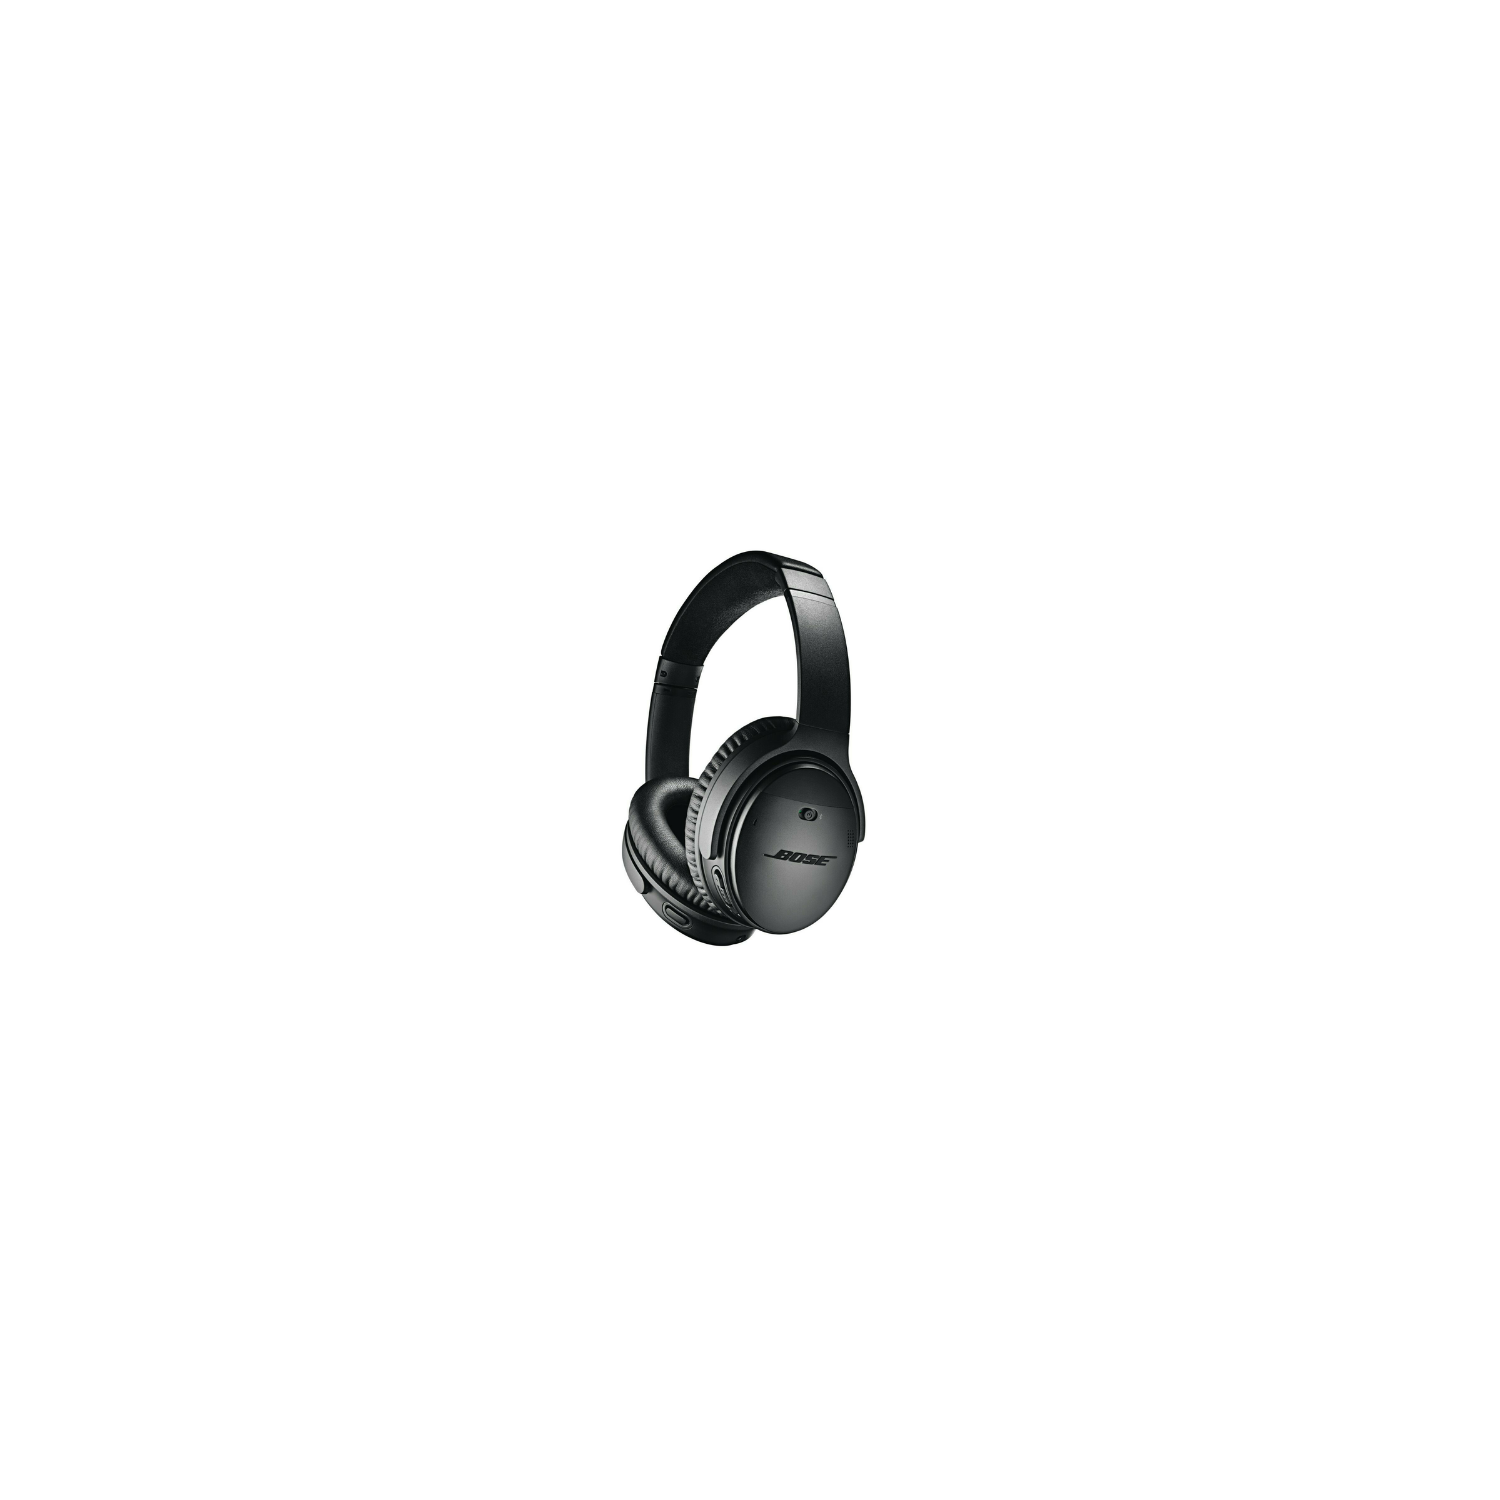 Refurbished (Excellent) - Bose QuietComfort 35 II Over-Ear Noise Cancelling Bluetooth Headphones - Black - Certified Refurbished